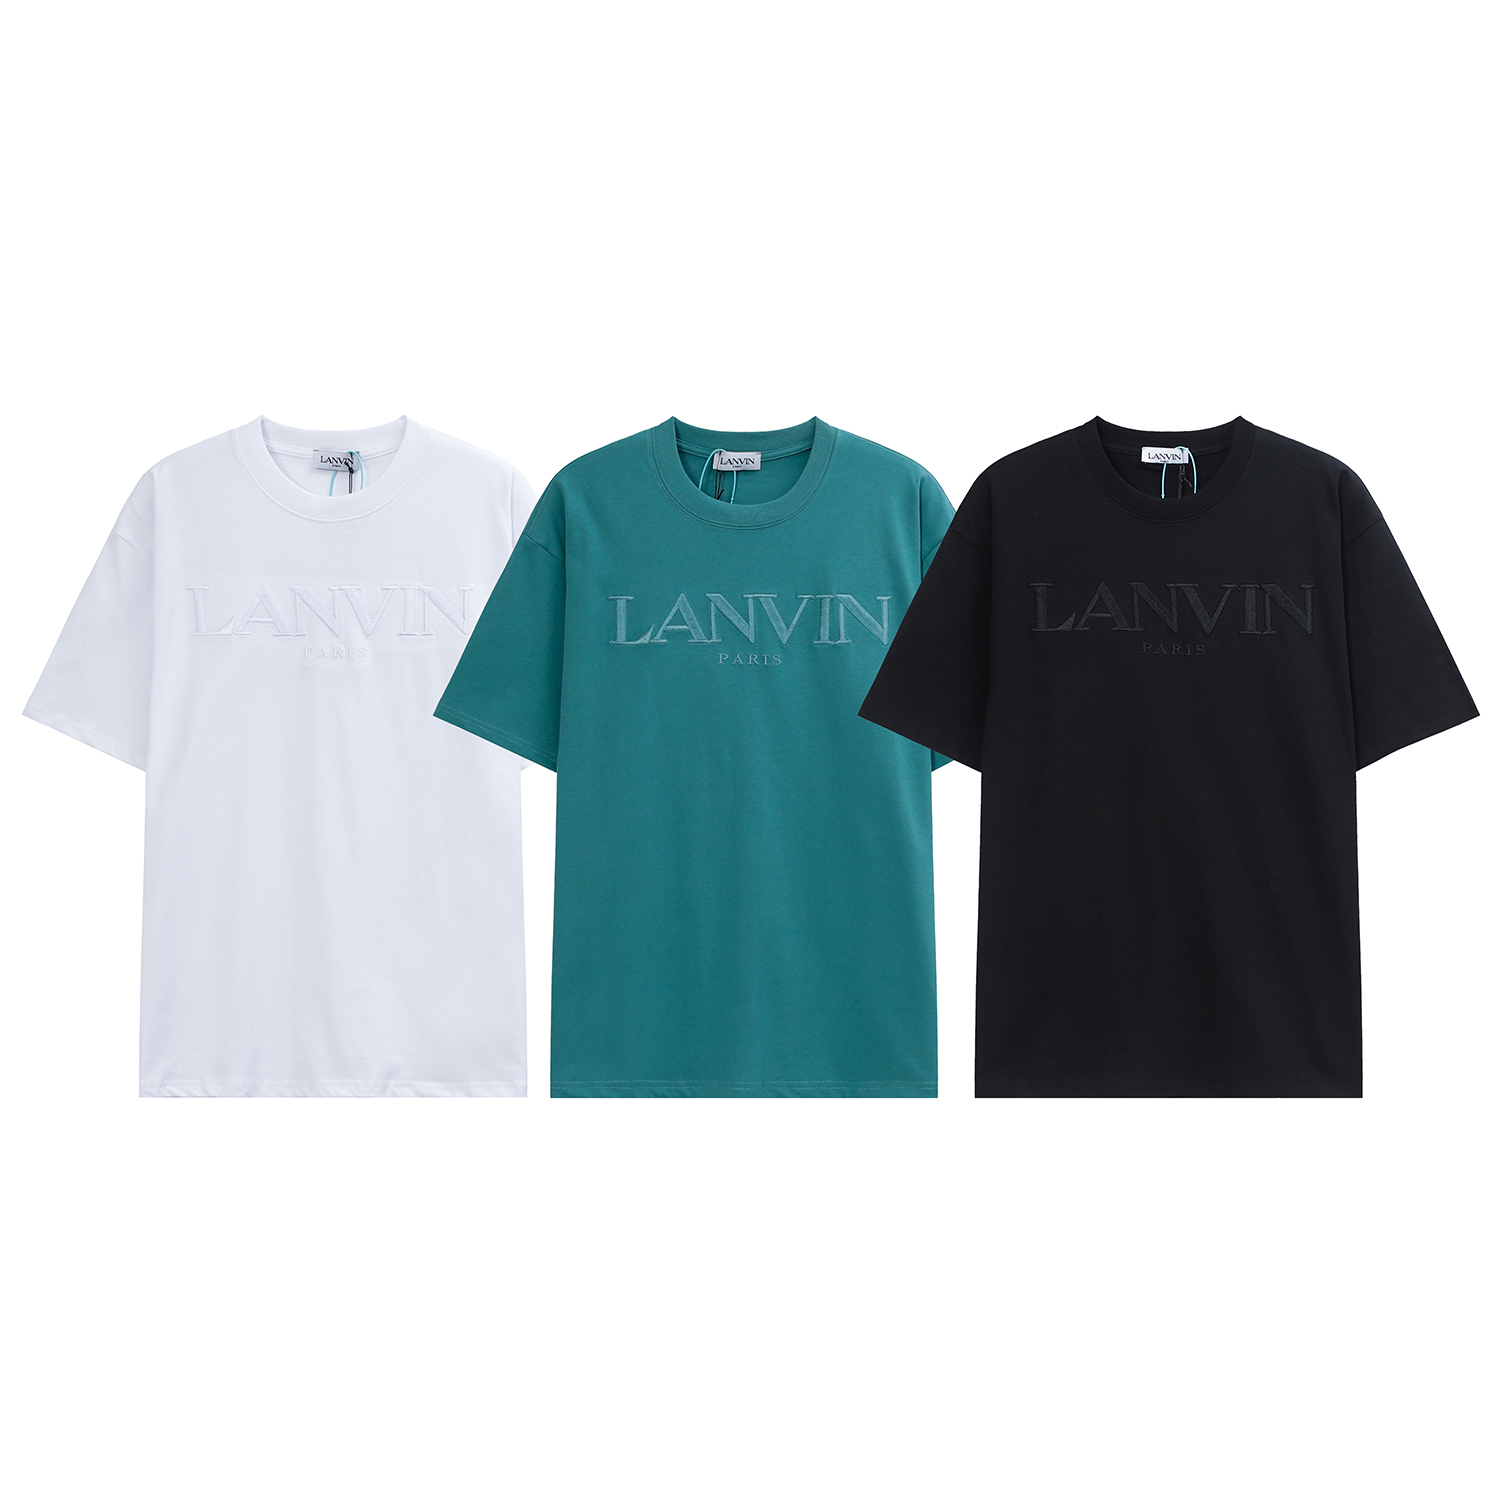 Lanvin Clothing T-Shirt Black Green White Embroidery Men